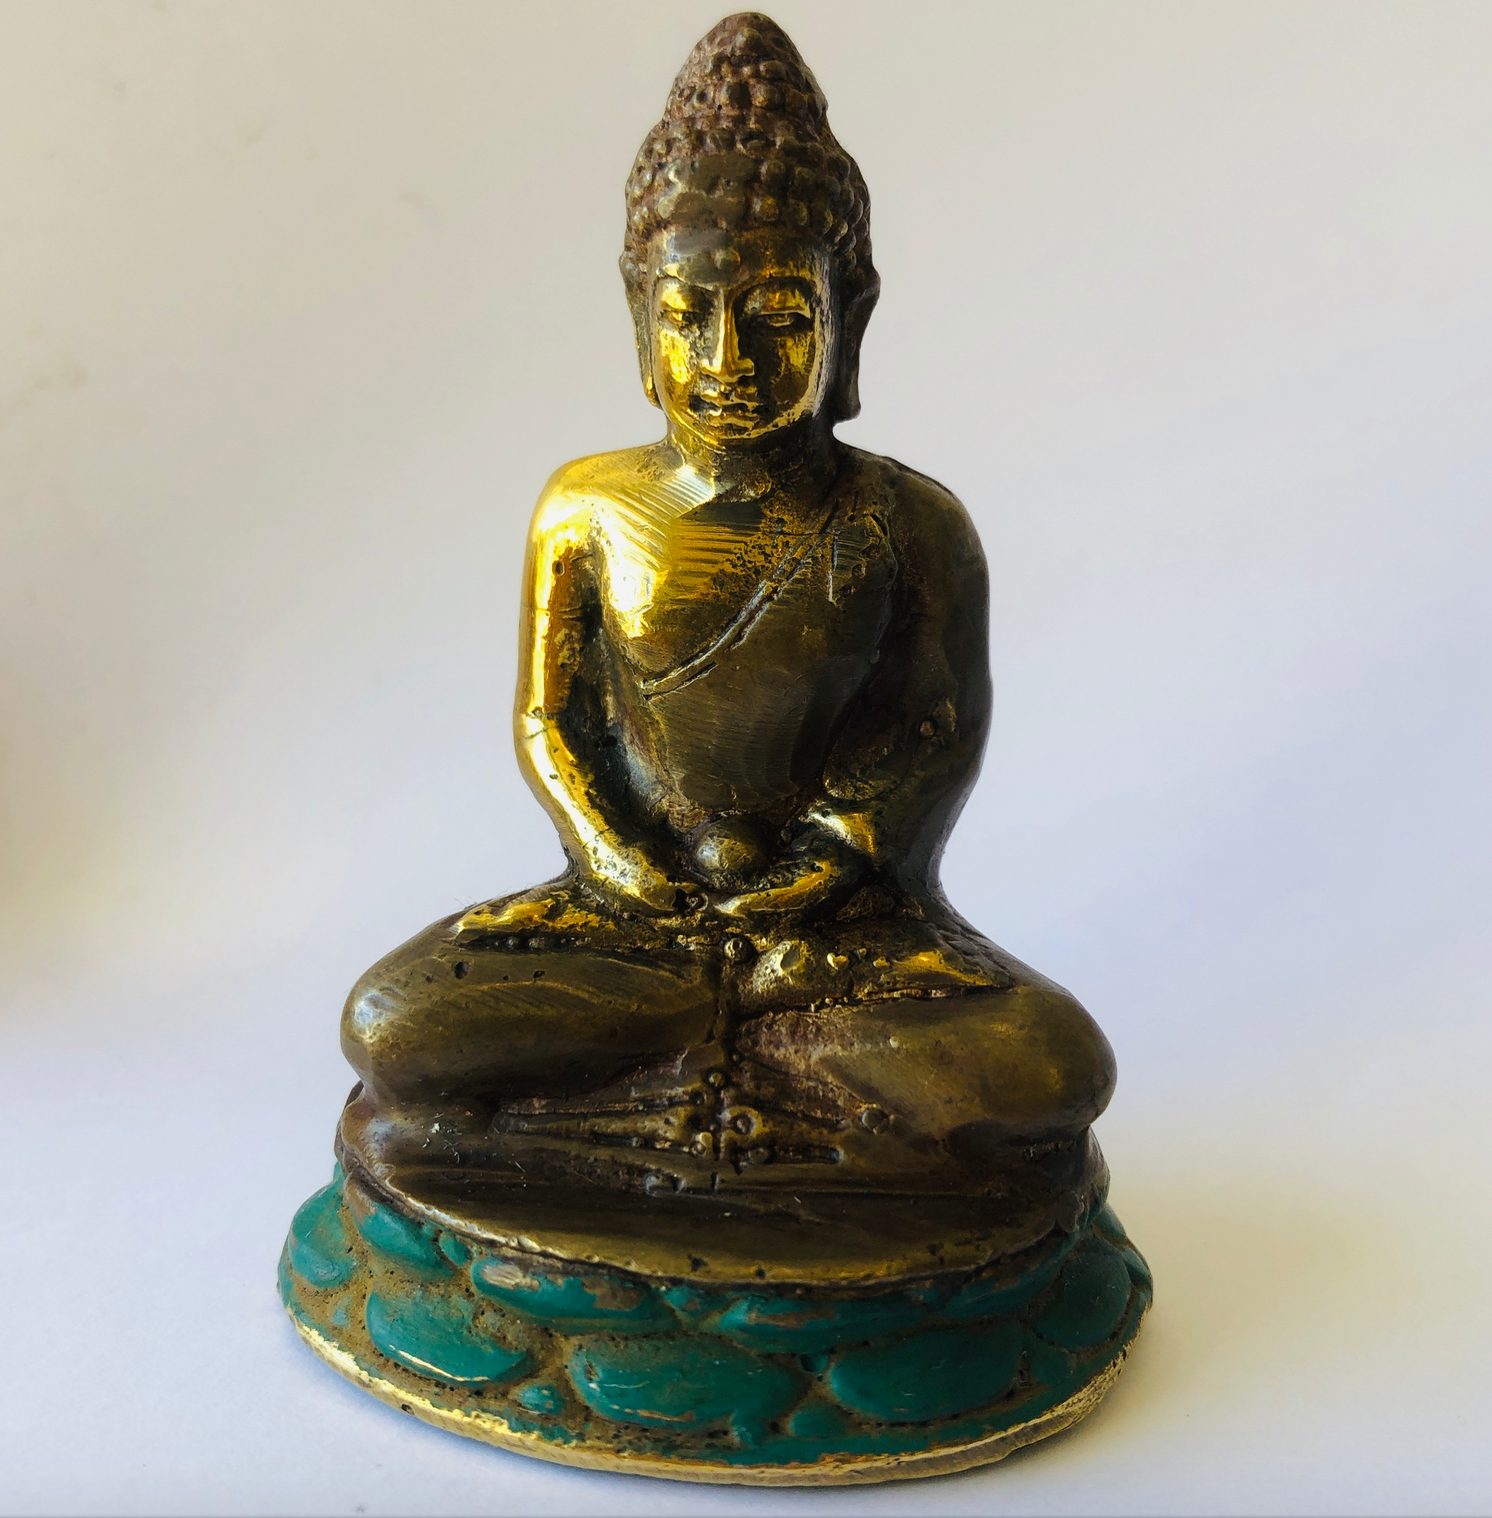 Meditation / Serenity / Calming Buddha